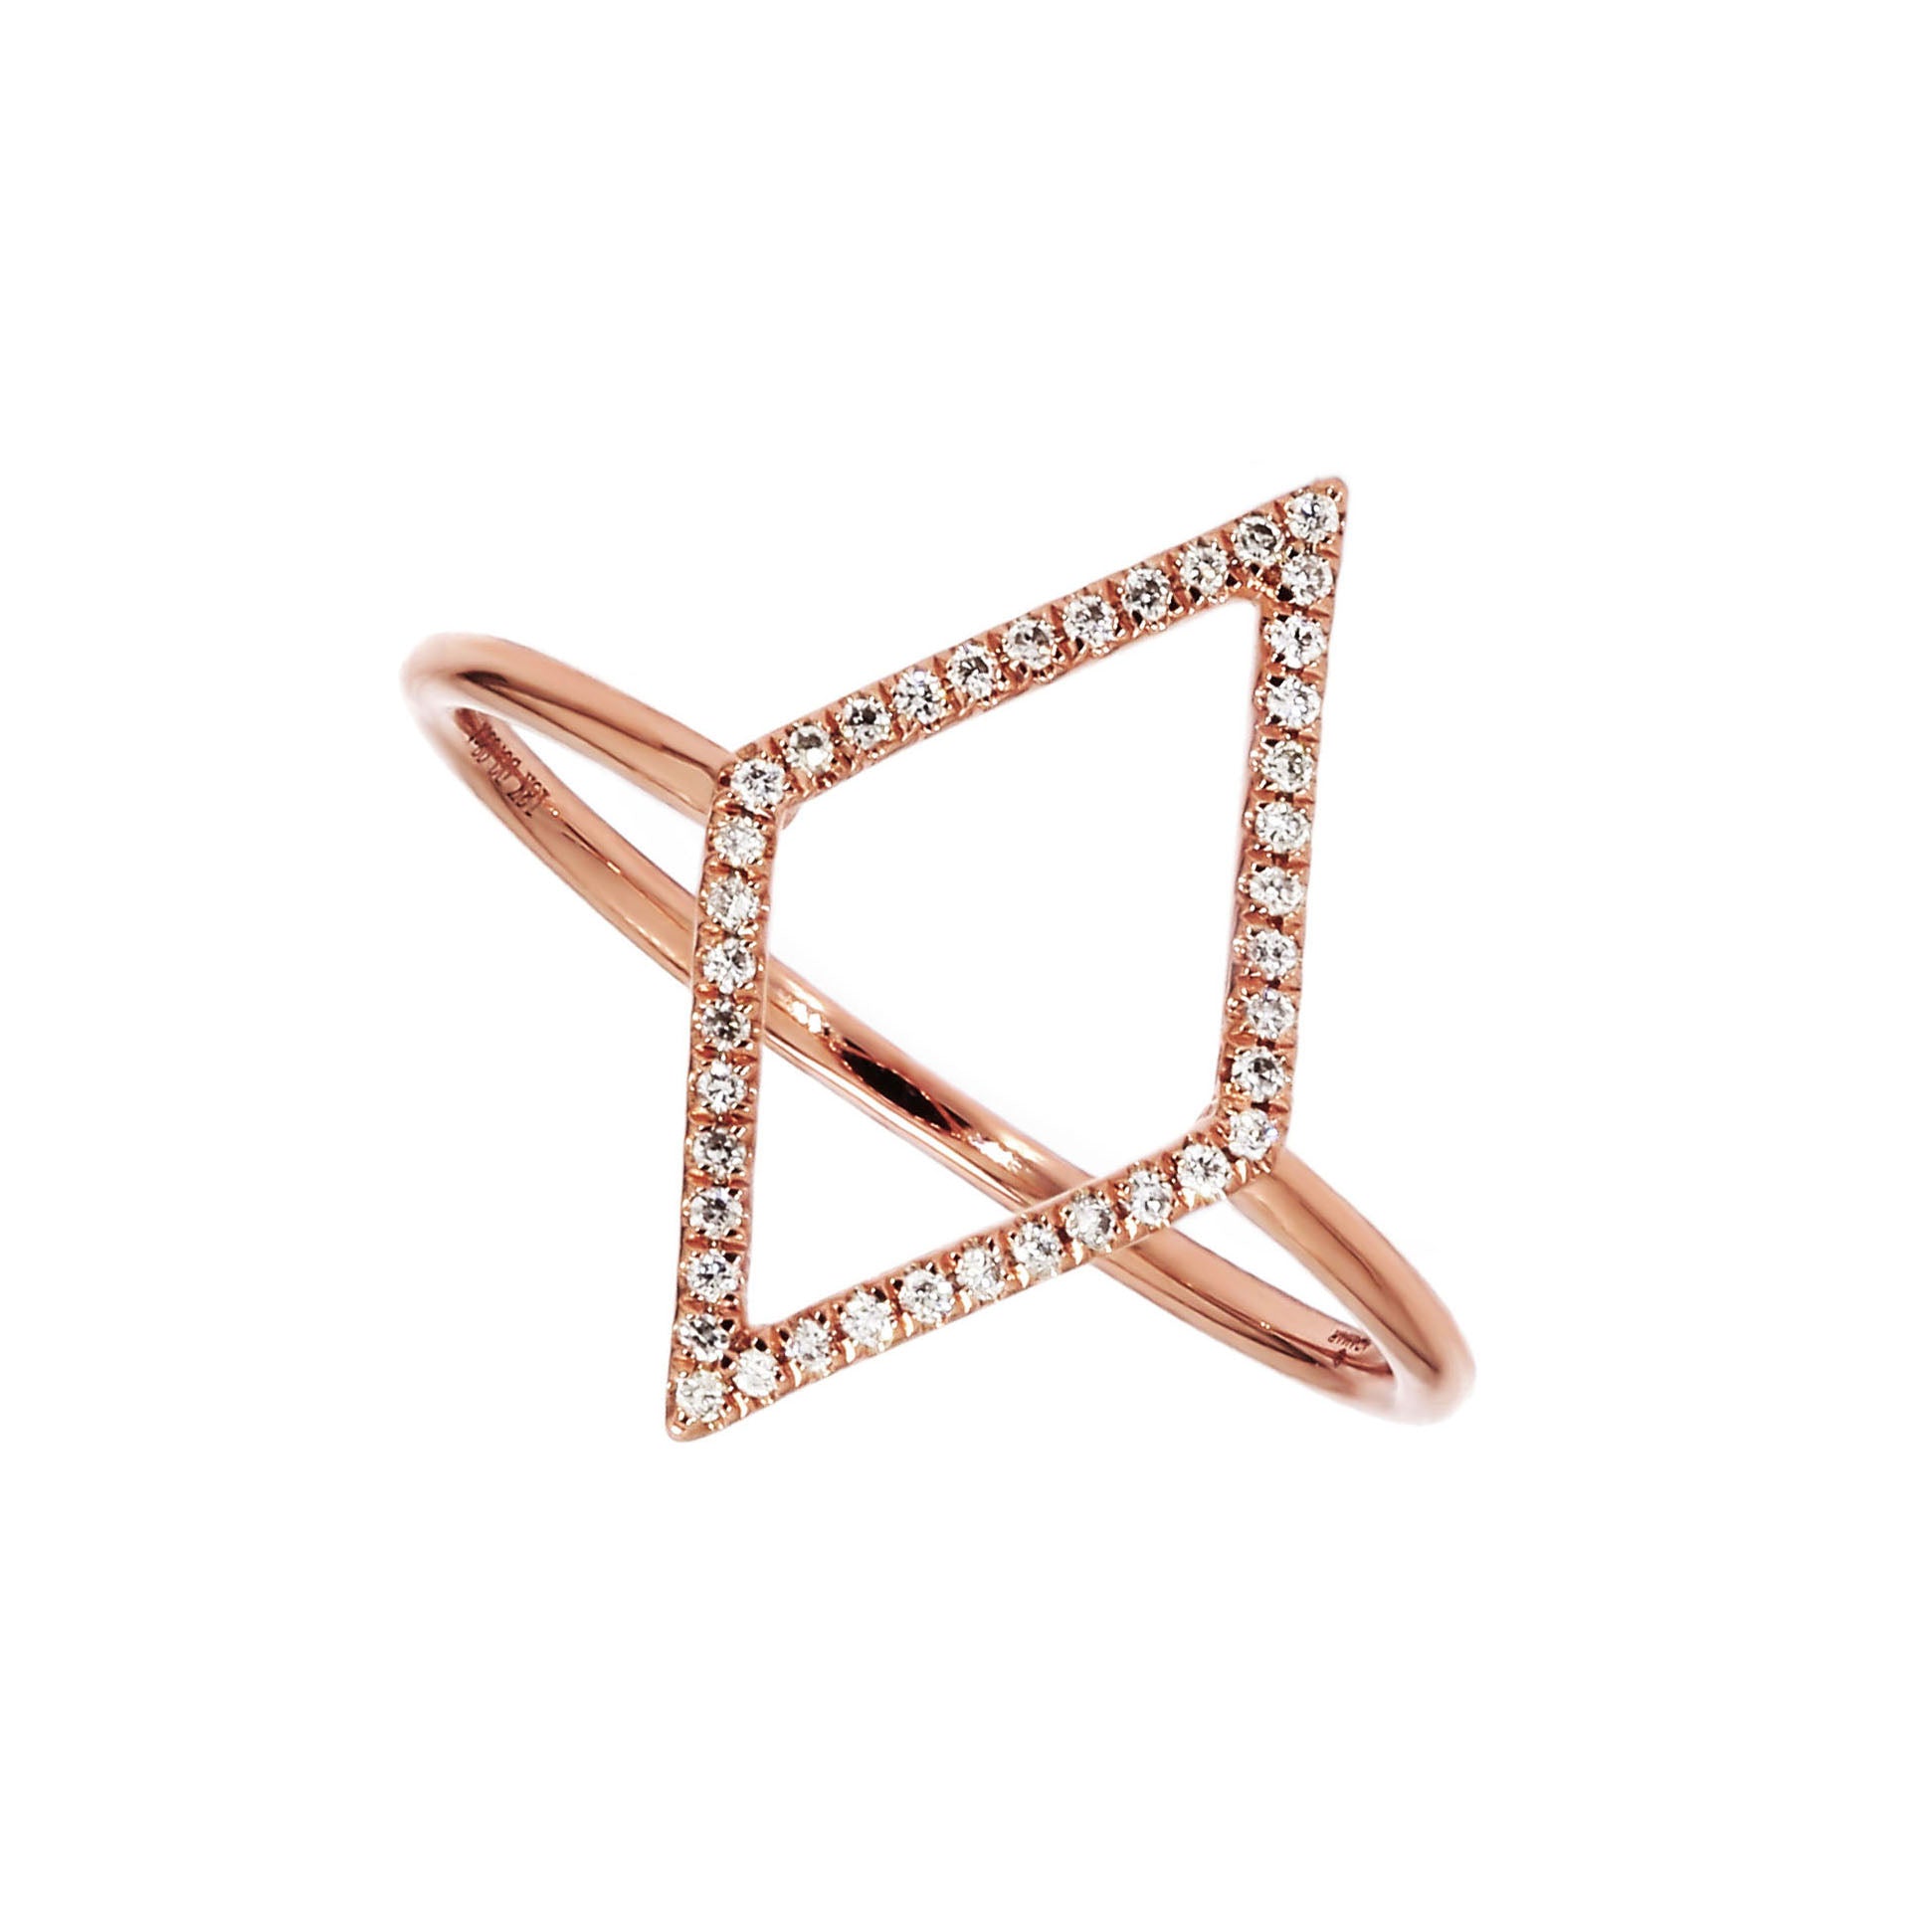 Adamar Jewels LUZ Cometa Ring in 18K rose gold set with diamonds